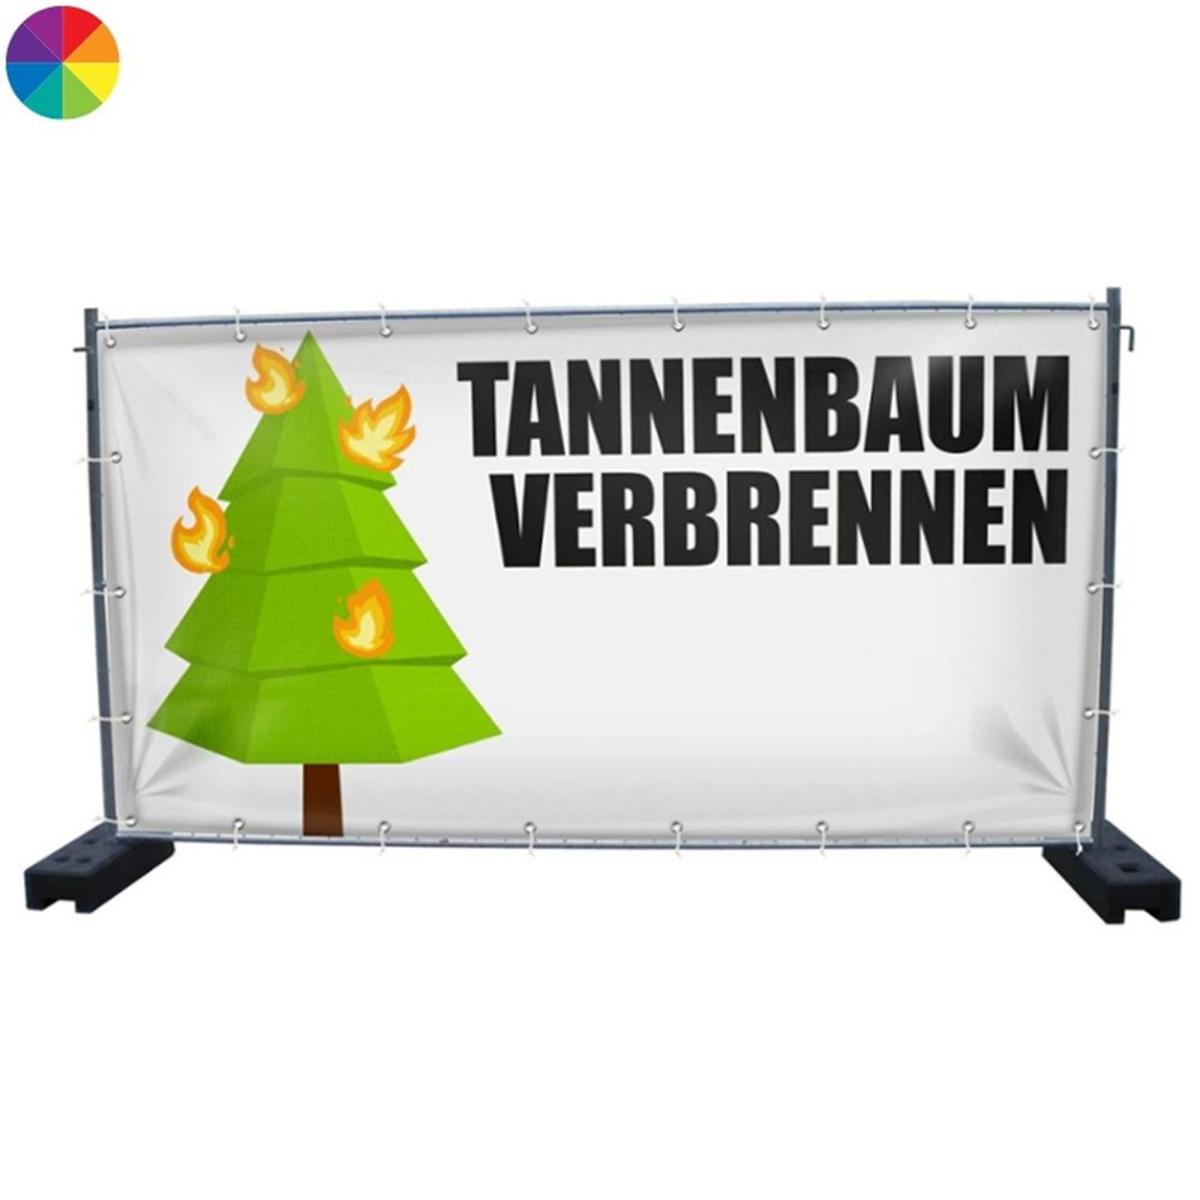 340 x 173 cm | Tannenbaum Verbrennen Bauzaunbanner (2809)